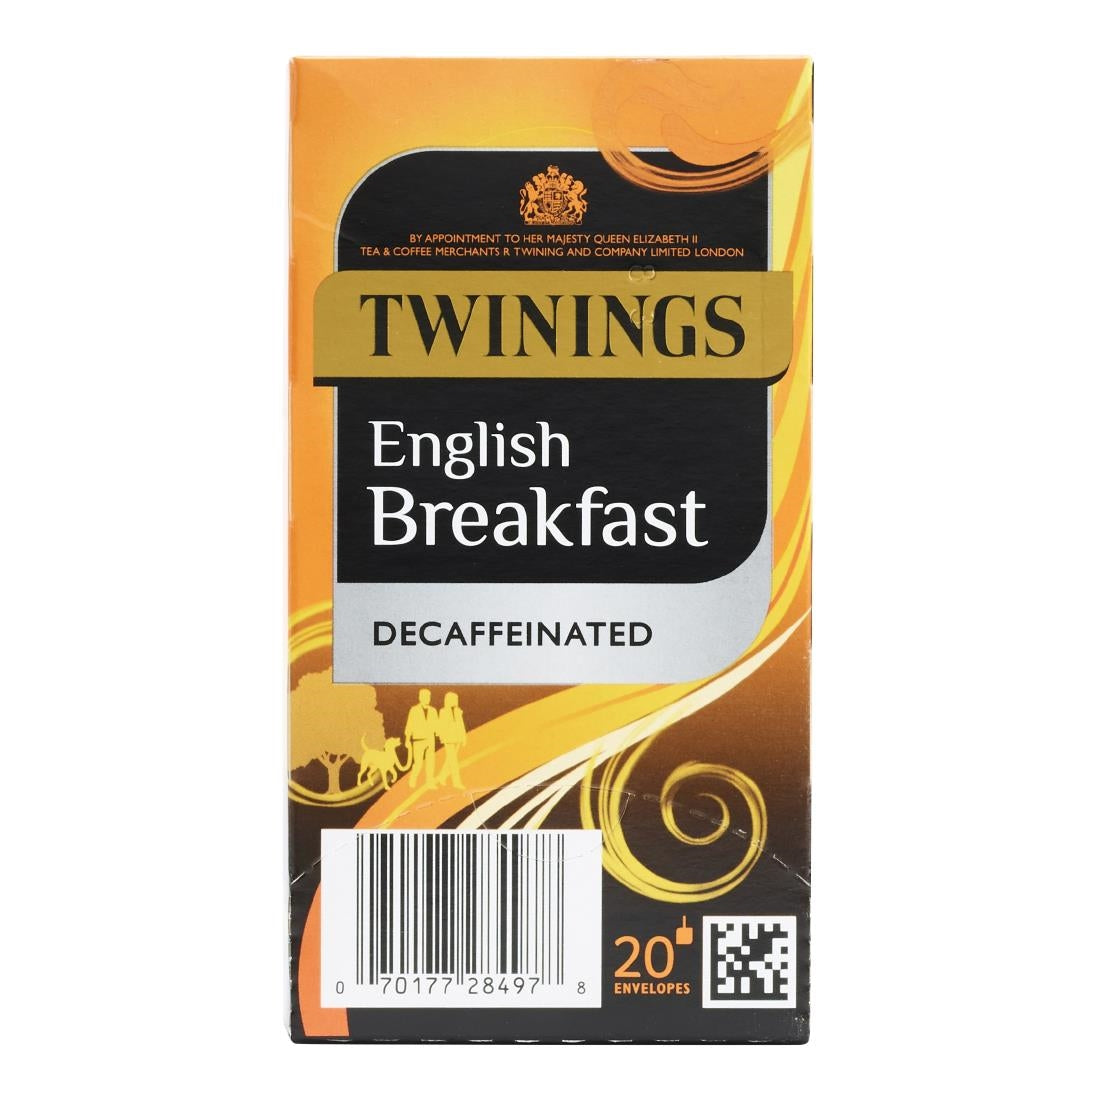 DZ460 Twinings English Breakfast Decaffeinated Enveloped Tea Bags (Pack of 80)